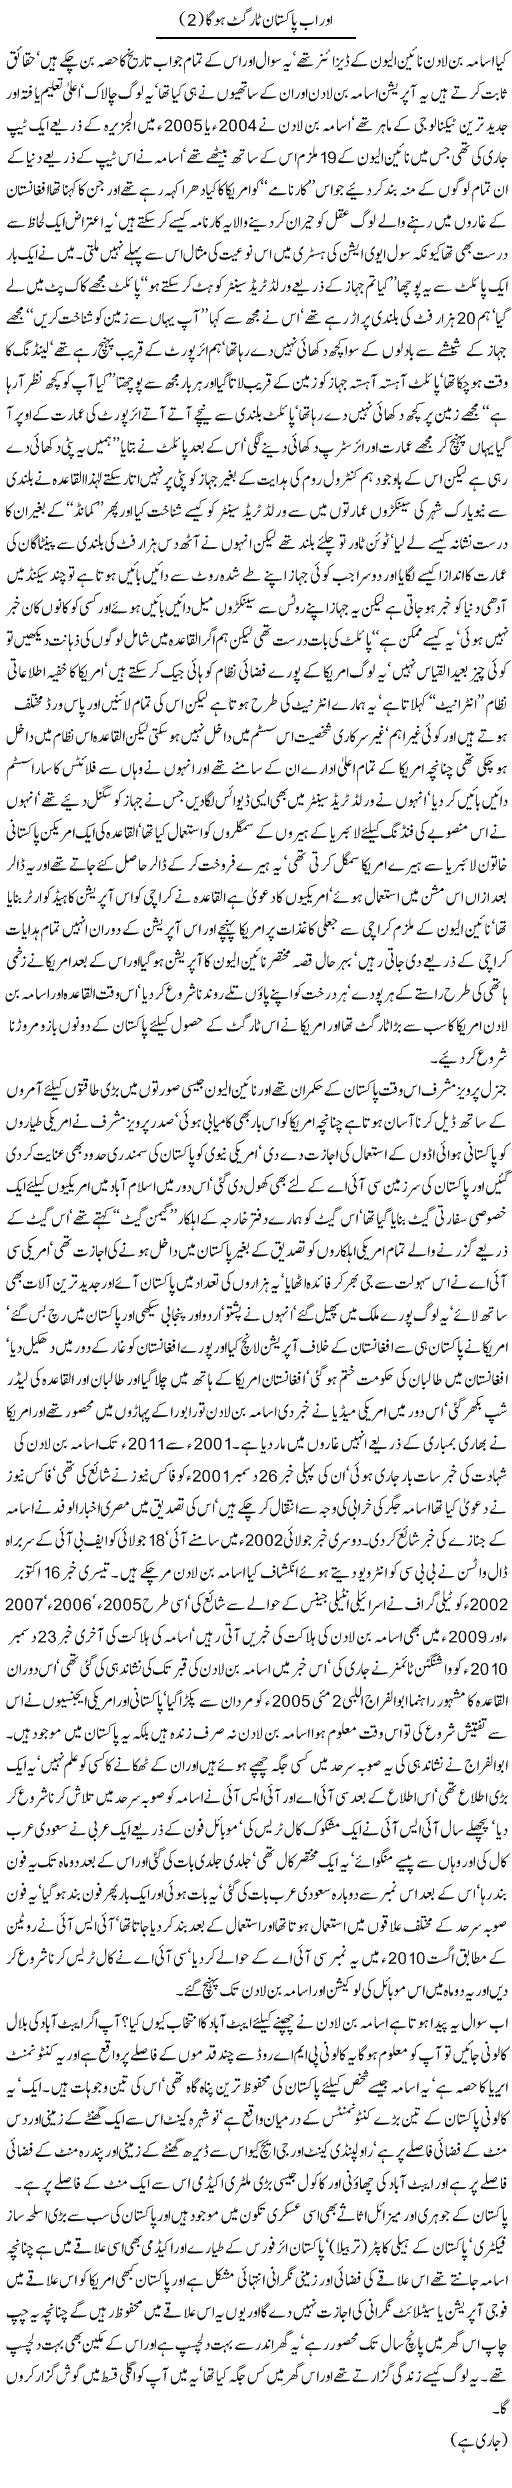 Ab Pakistan target ho ga - Javed Chaudhry